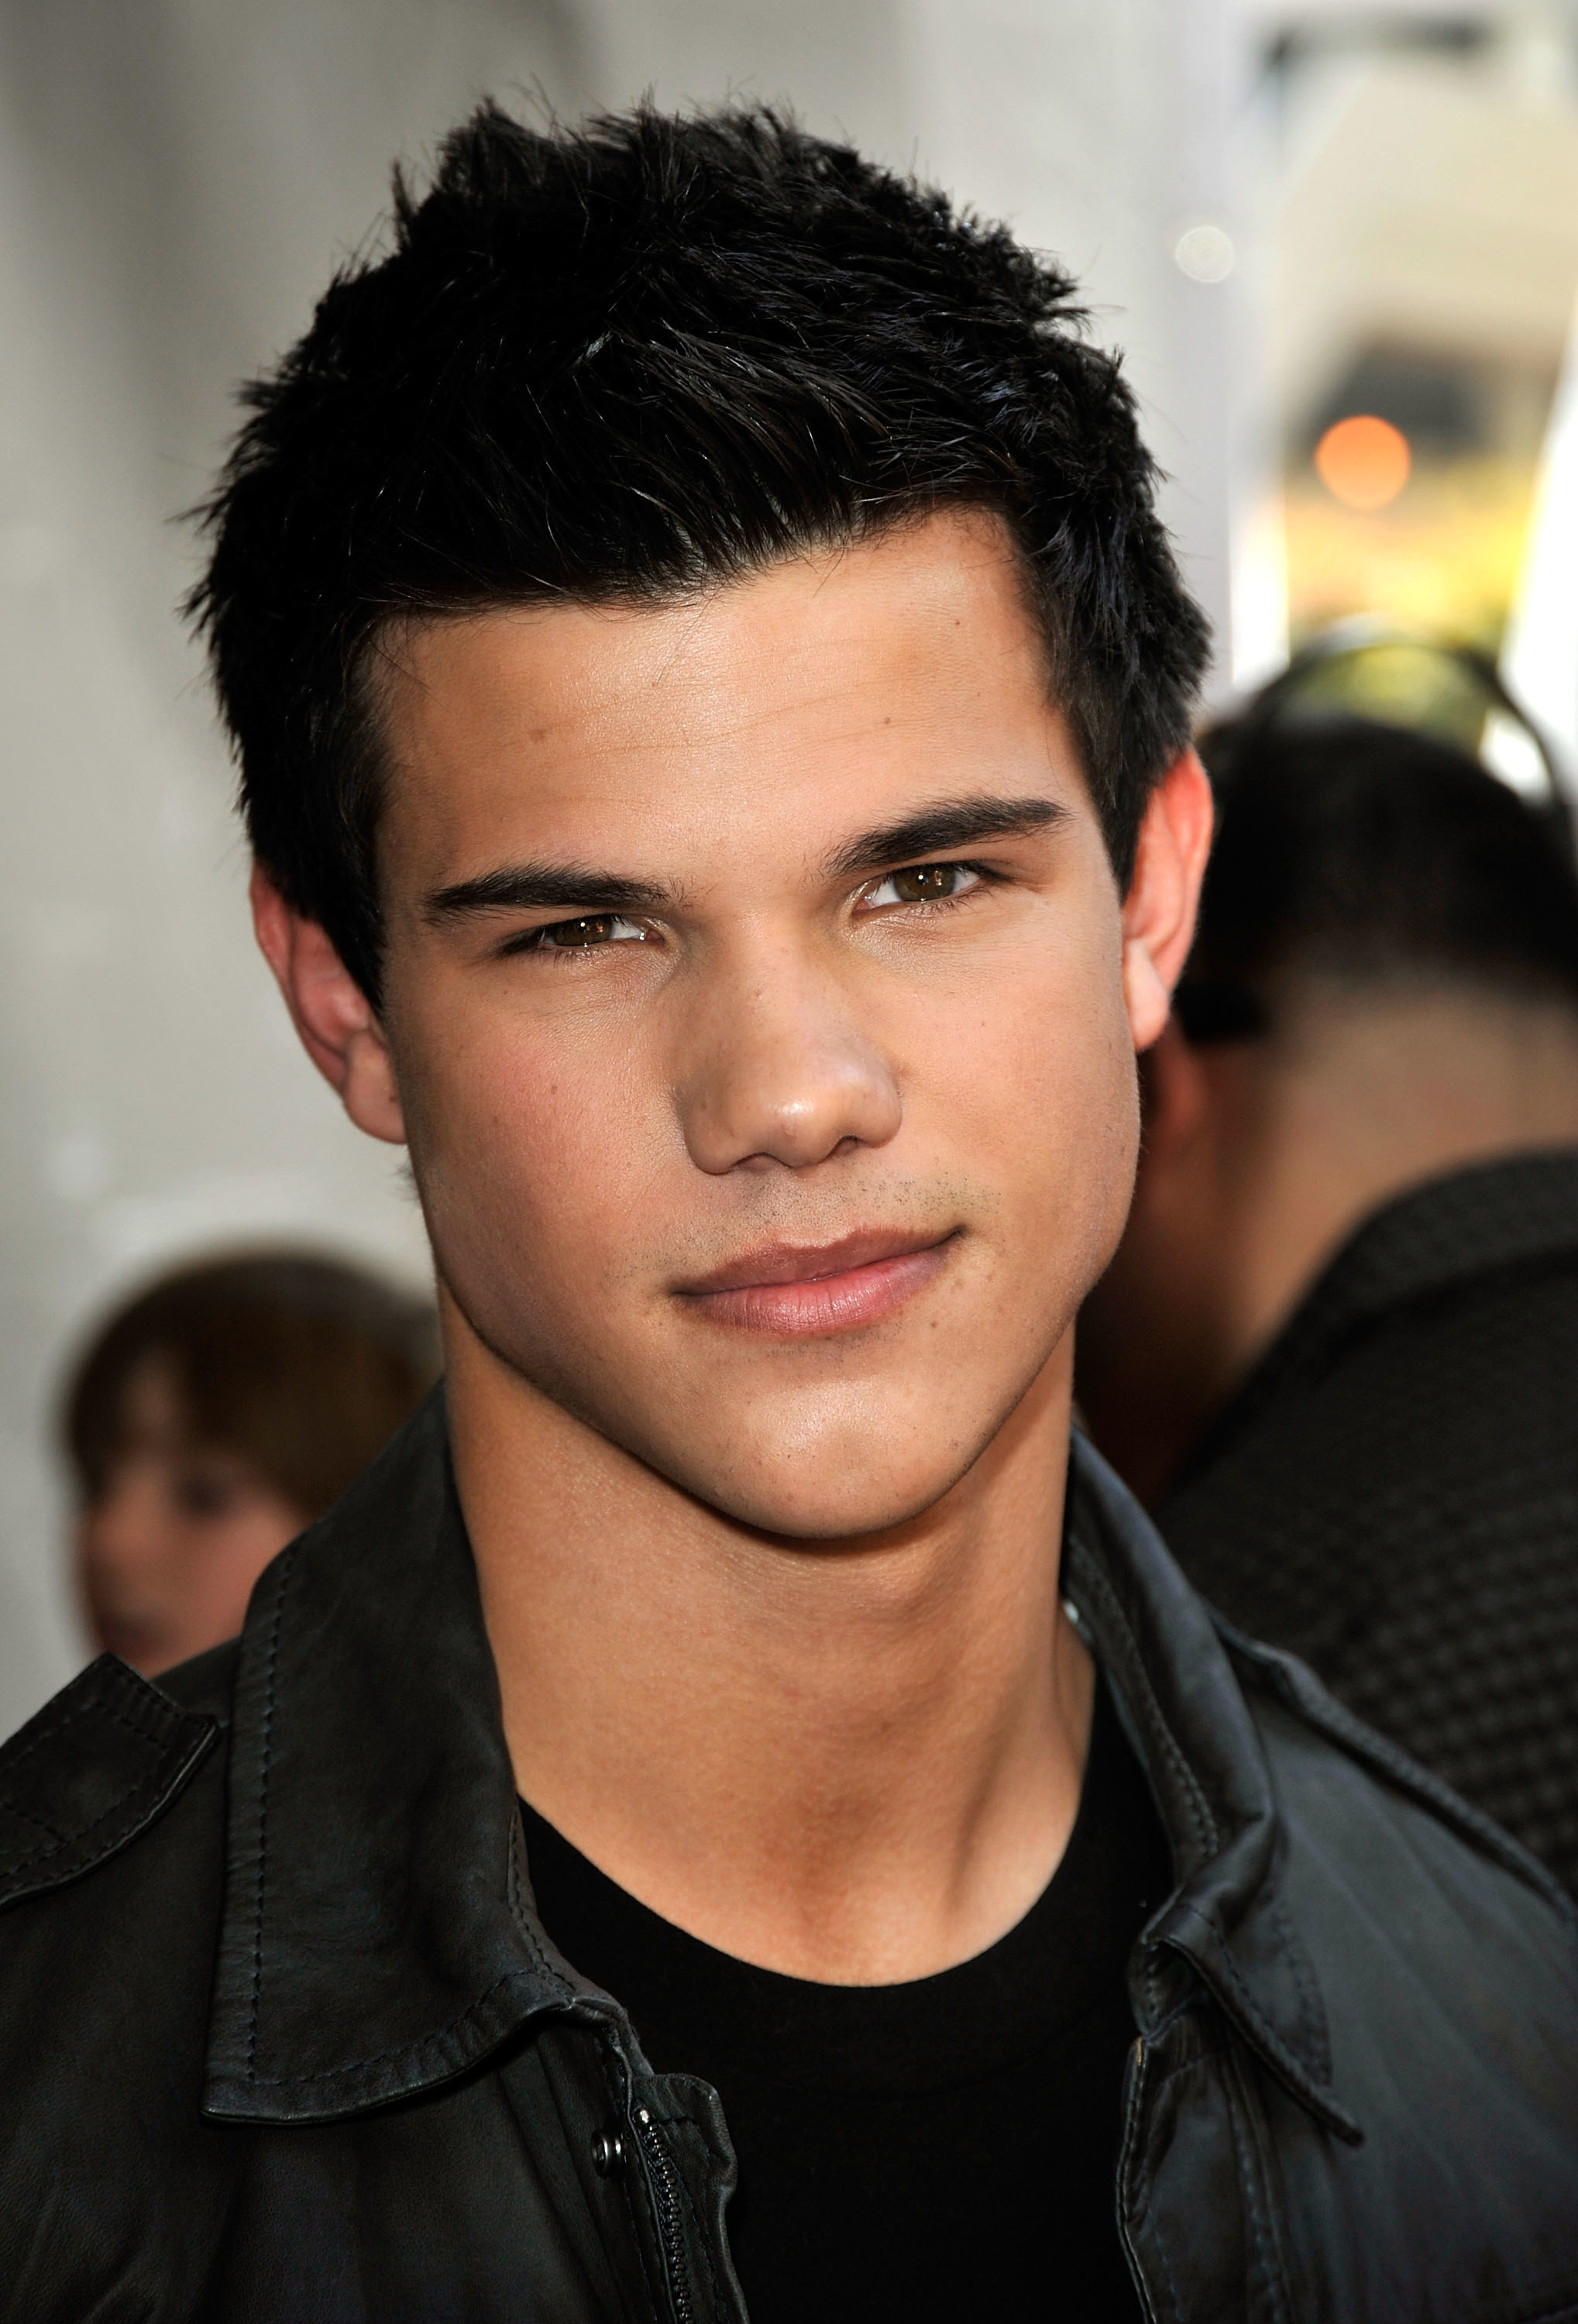 Taylor Lautner poses at the 2009 Nickelodeon&#x27;s Kids&#x27; Choice Awards